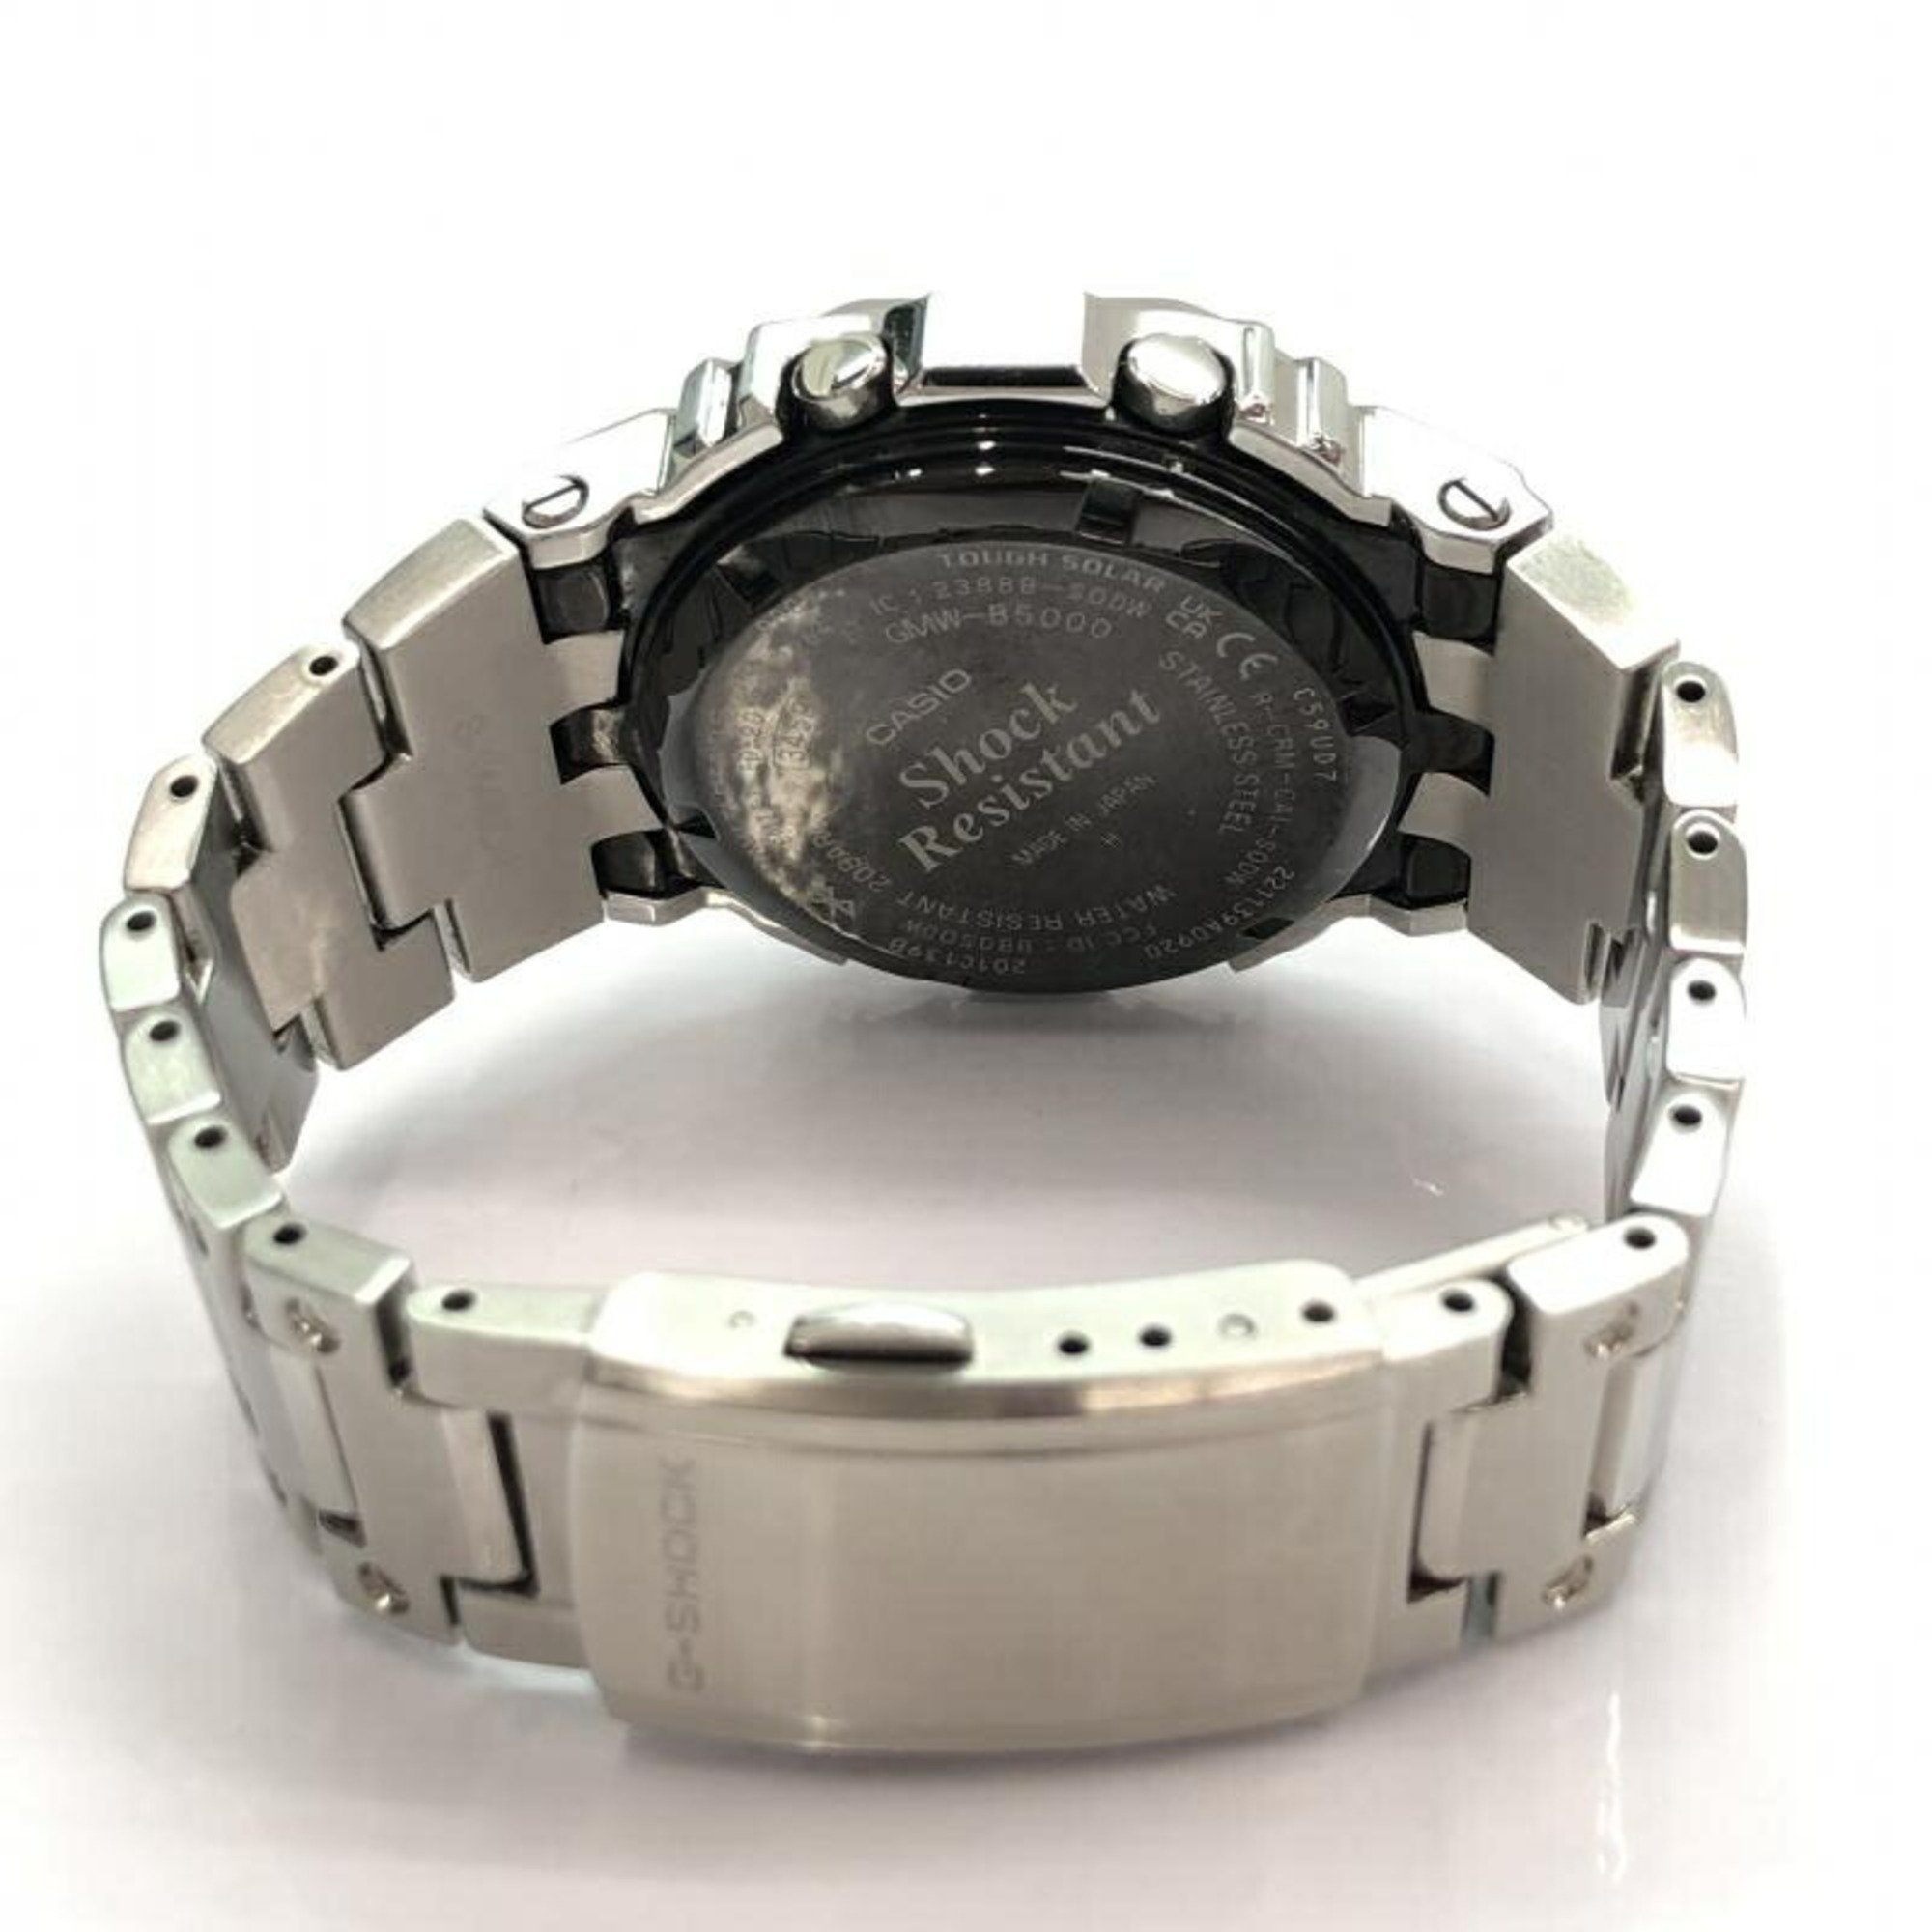 CASIO G-SHOCK GMW-B5000 watch full metal solar powered